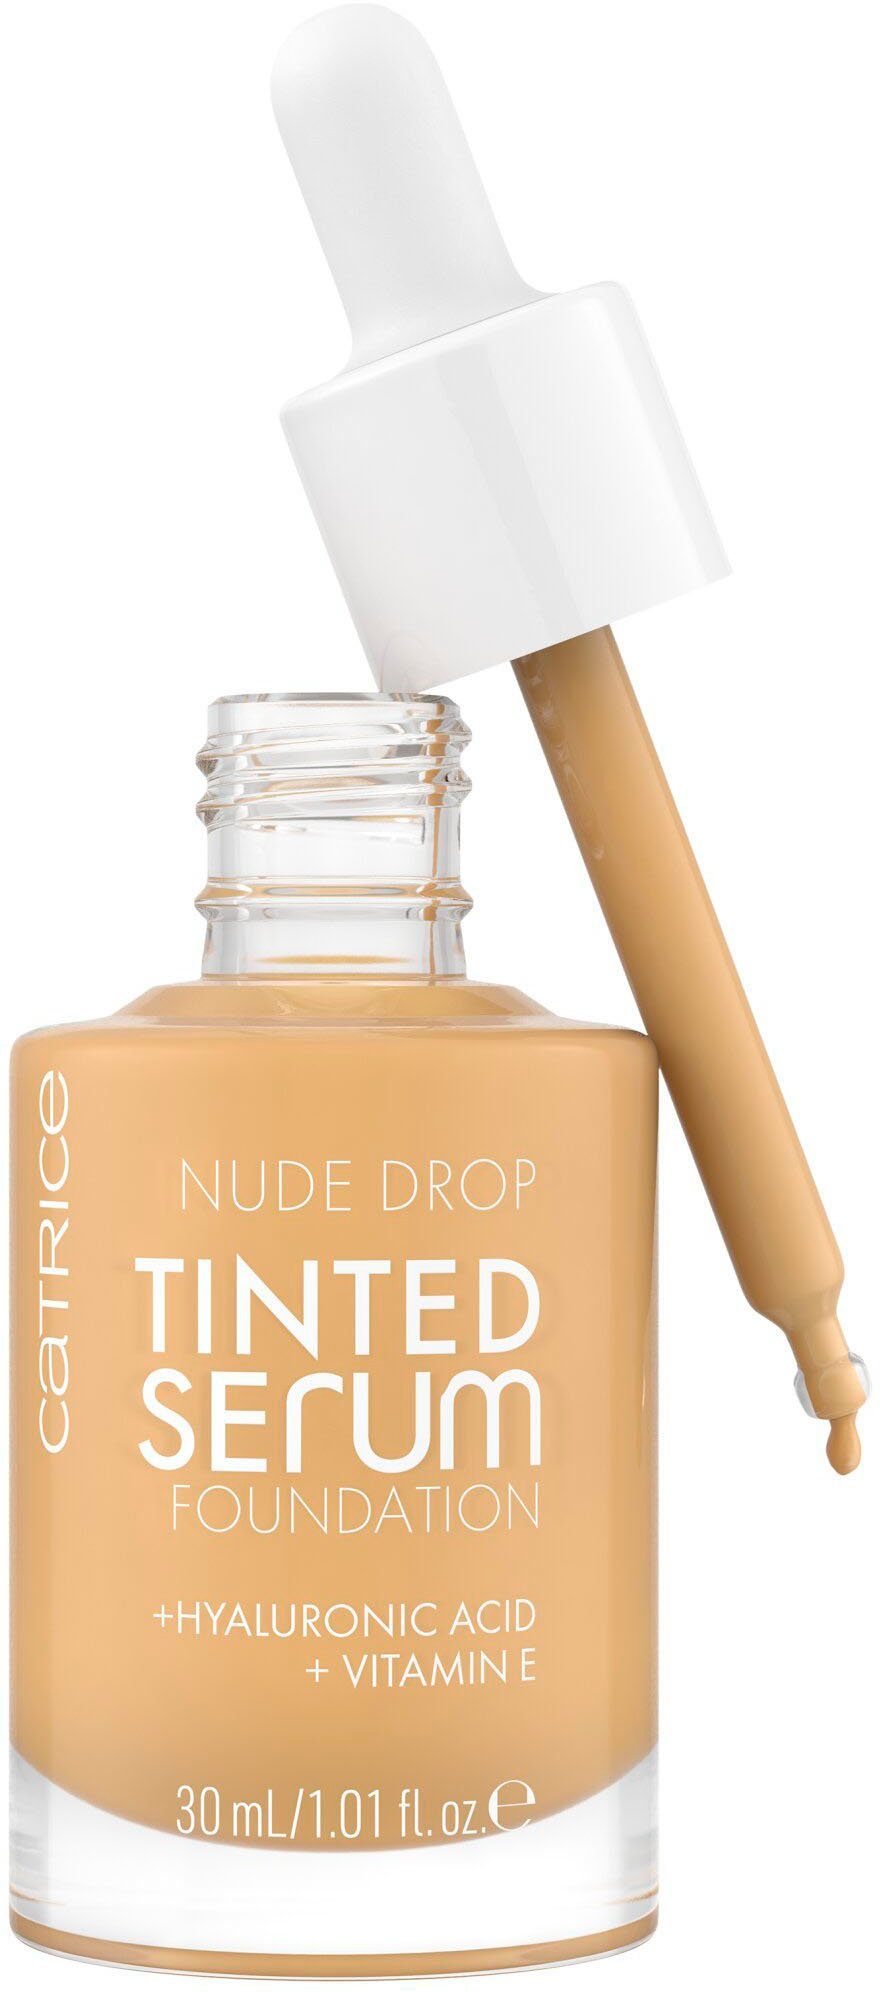 038W Tinted Nude Catrice Foundation nude Foundation Drop Serum